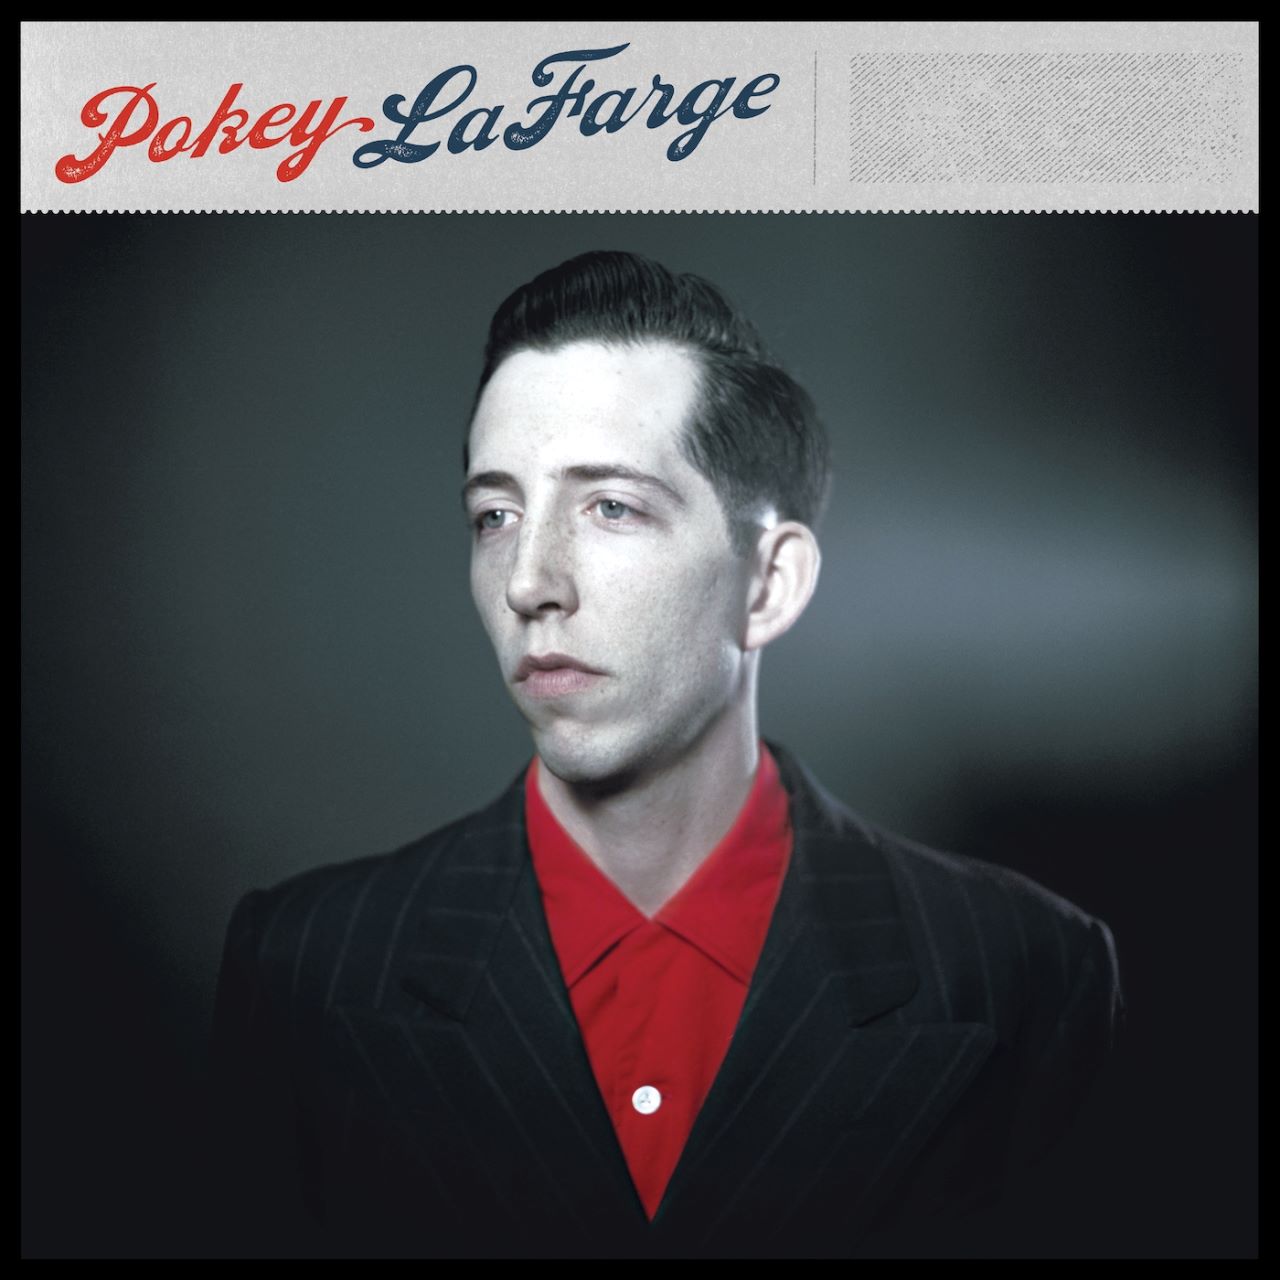 Pokey LaFarge - Pokey LaFarge cover album